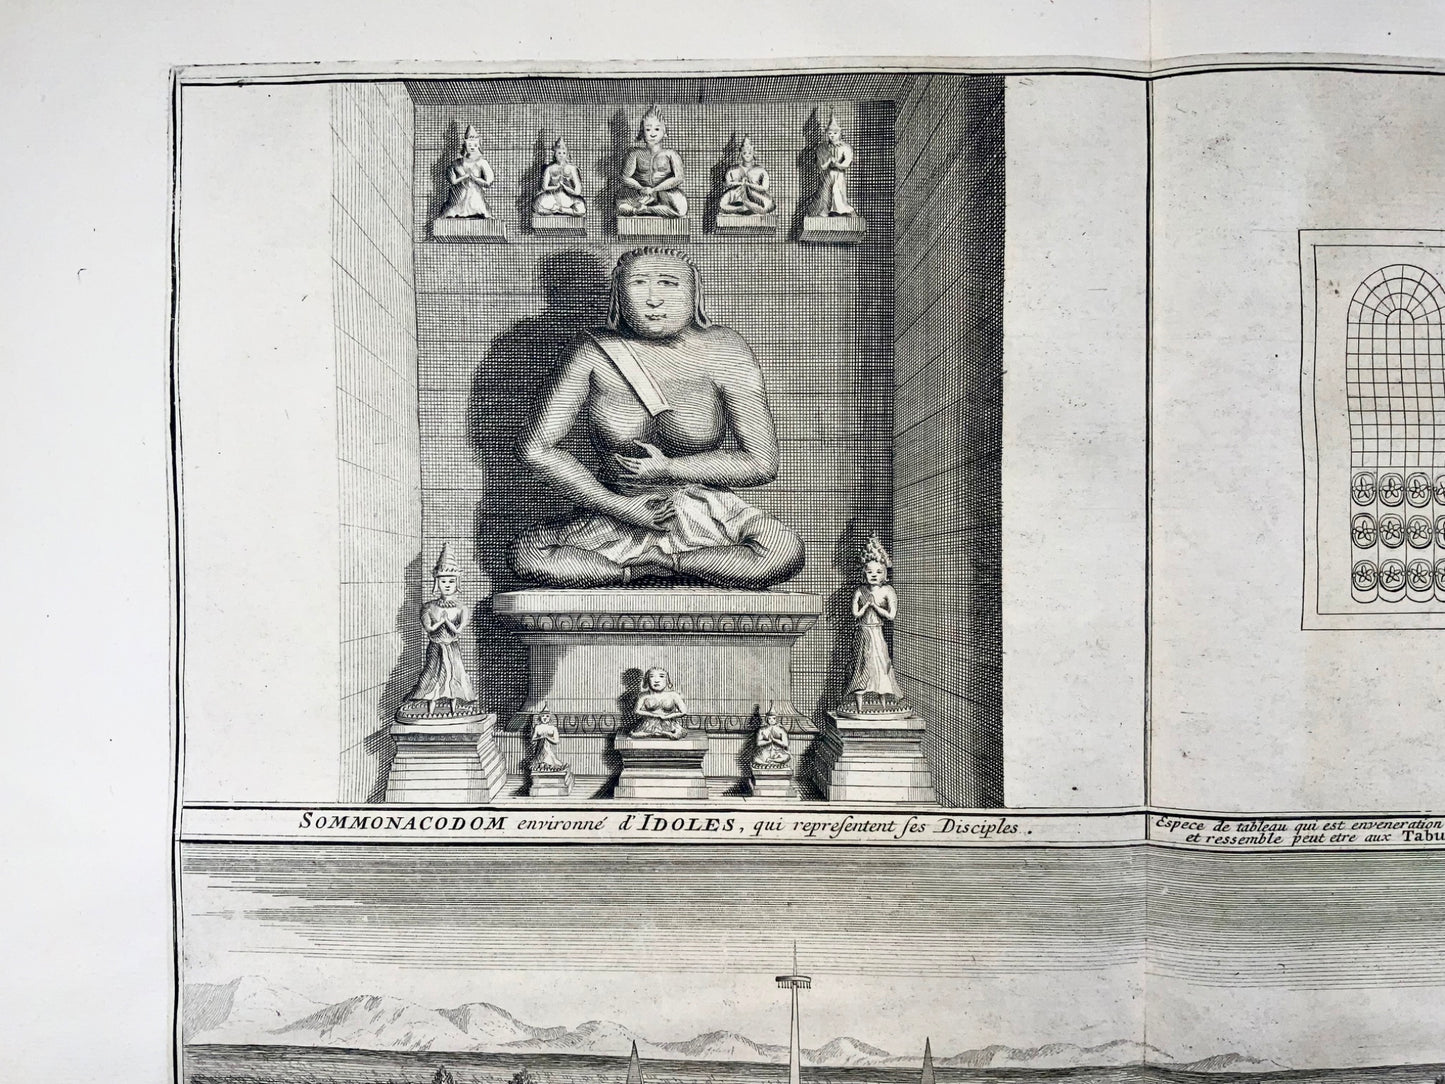 1729 [B. Picart], Idols of Siam (Thailand), Temple of Barkalam, double folio